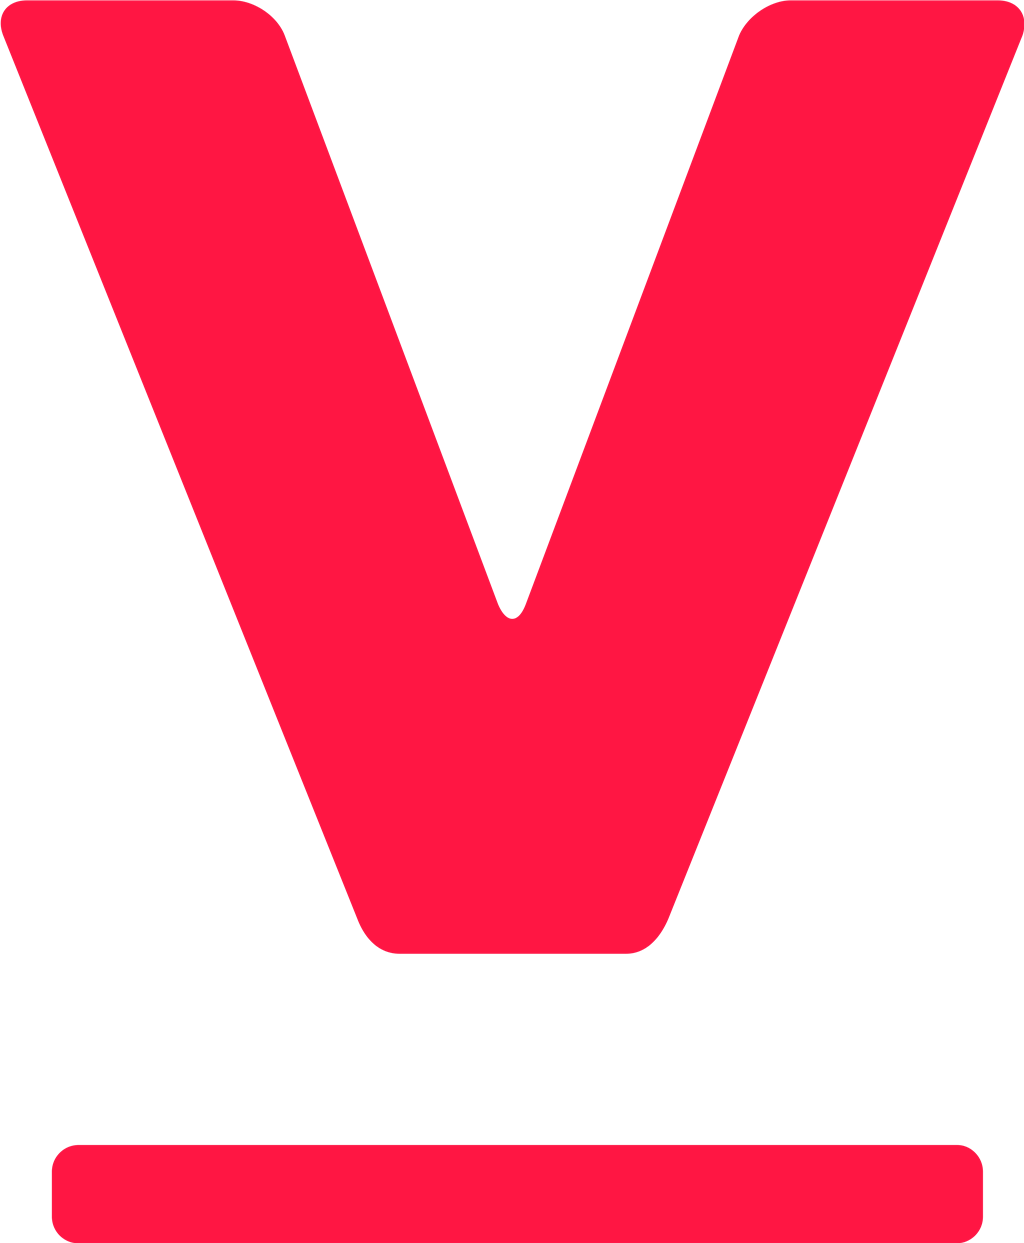 Verily logotype, transparent .png, medium, large